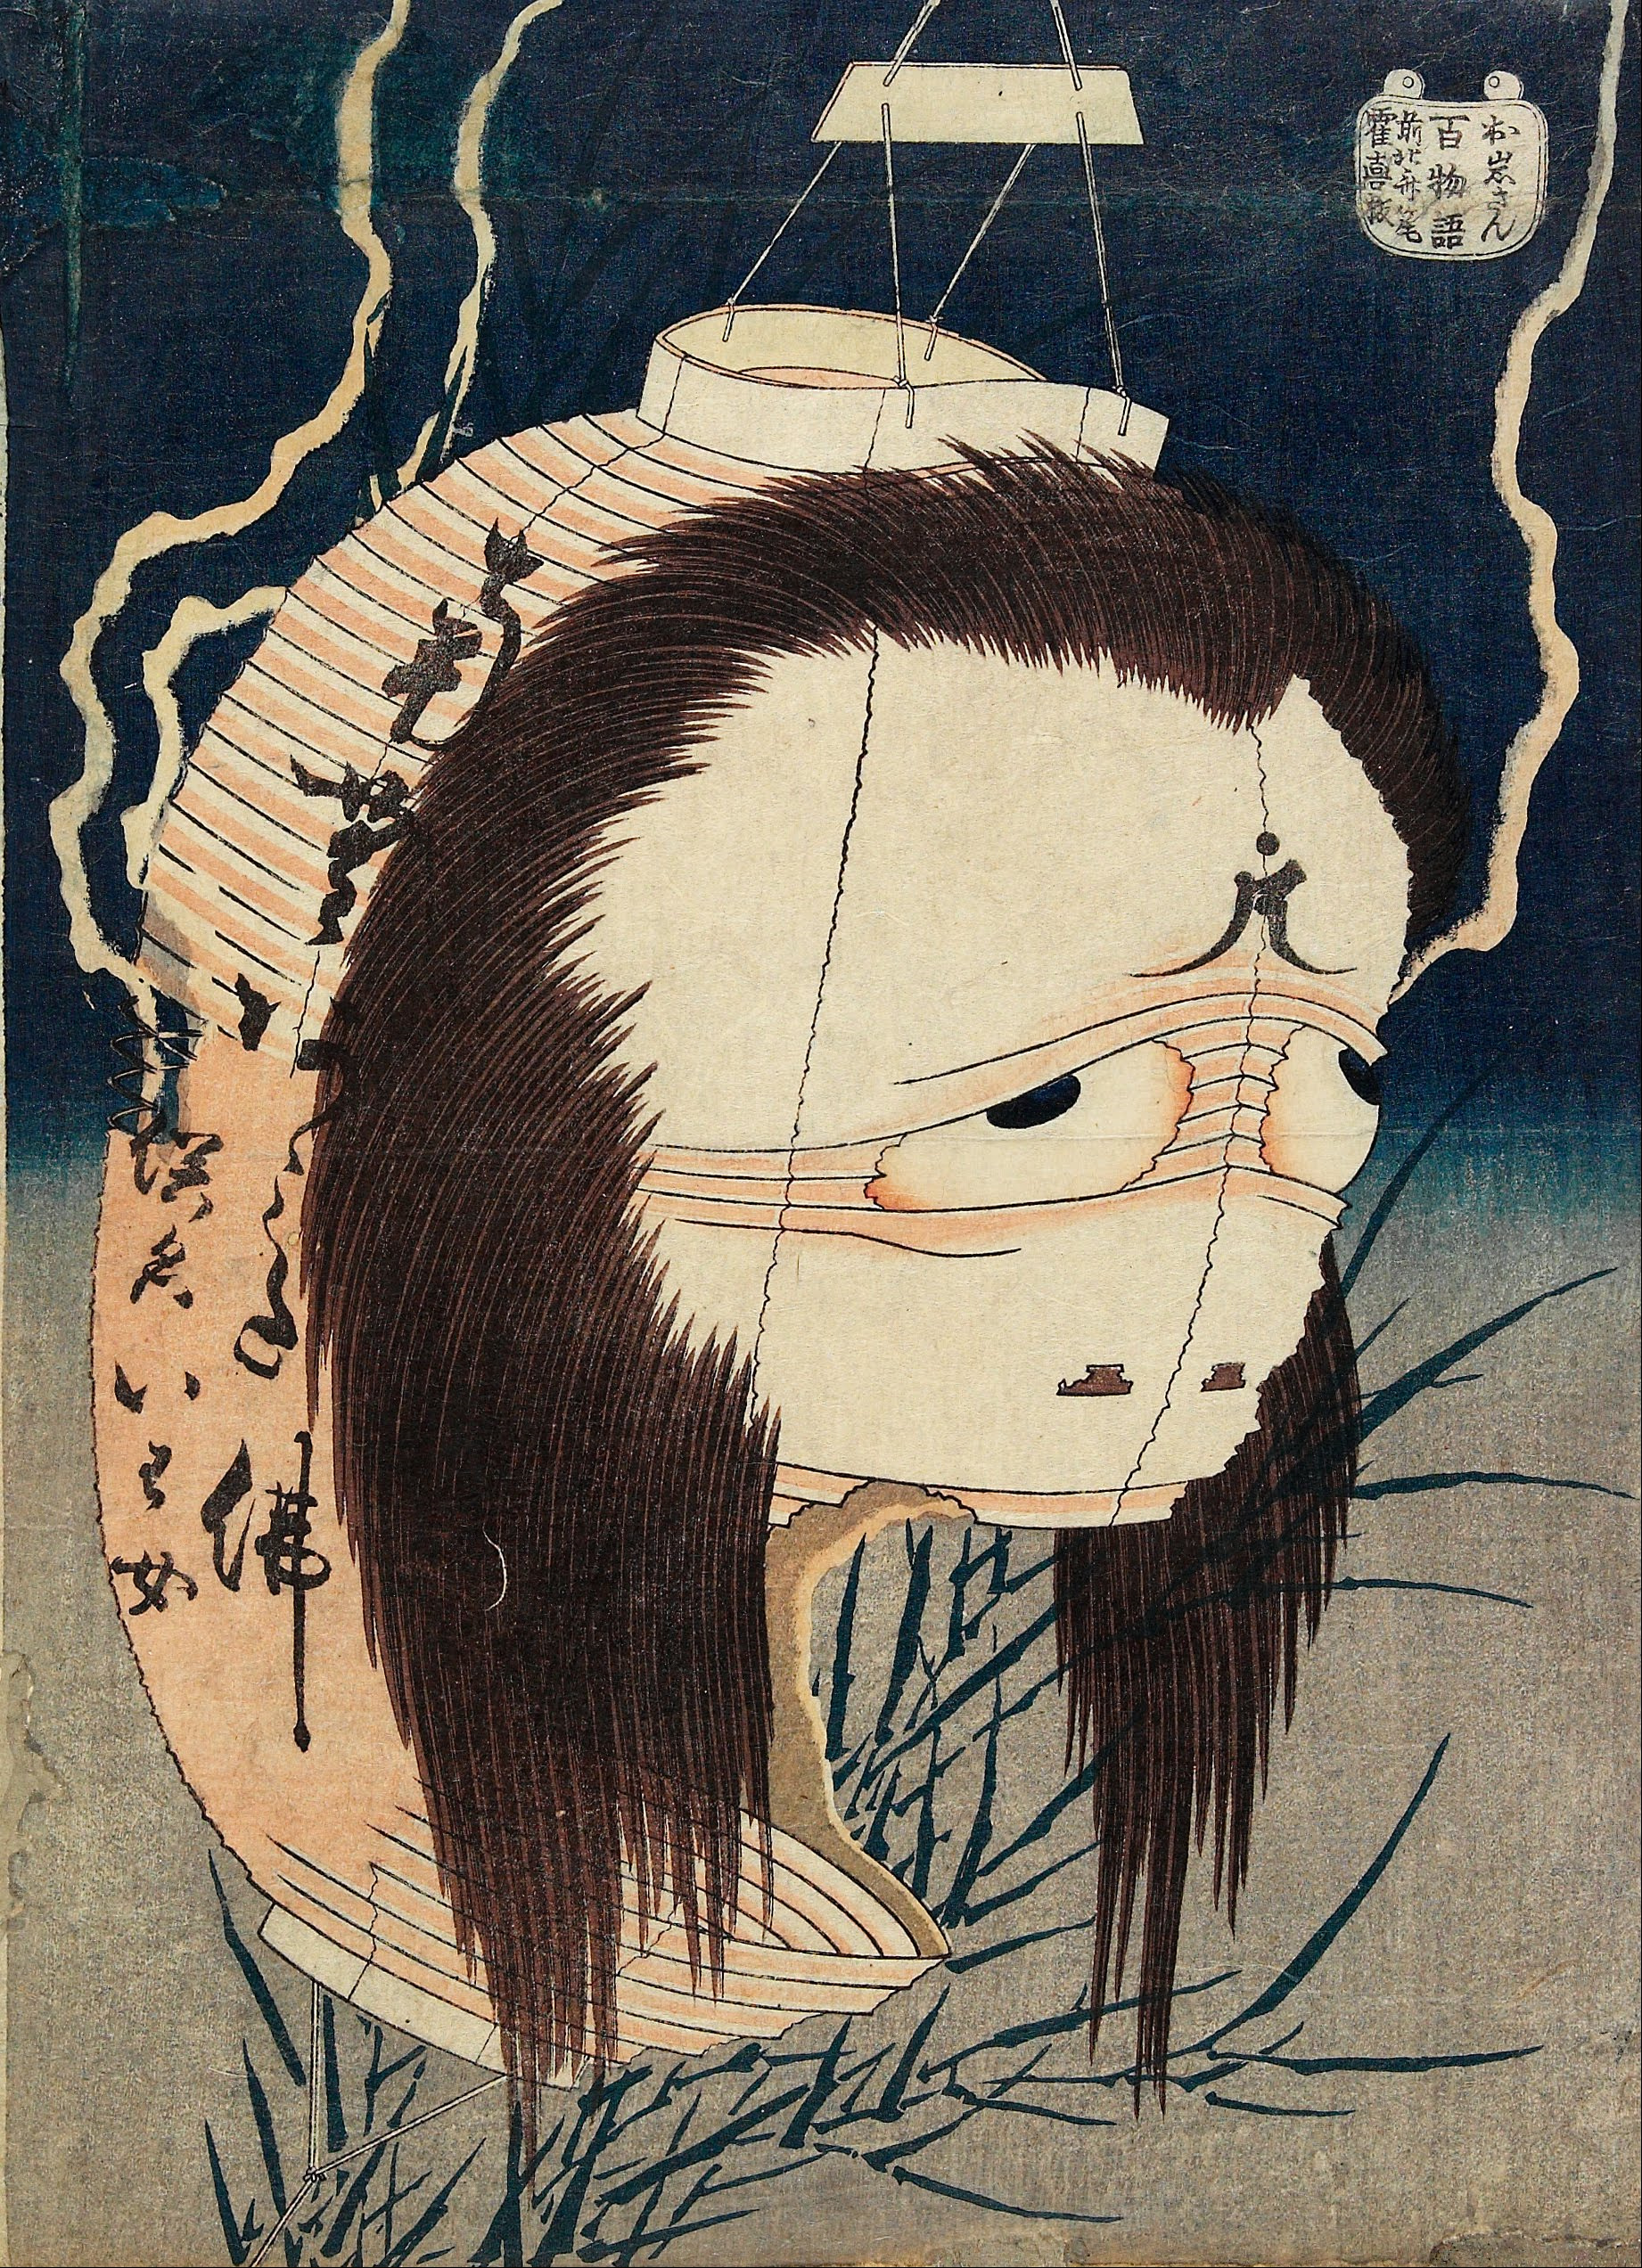 The Lantern Ghost, Iwa by Katsushika Hokusai - c. 1831-1832 - 10 3/8 x 7 7/16 in. Minneapolis Institute of Art